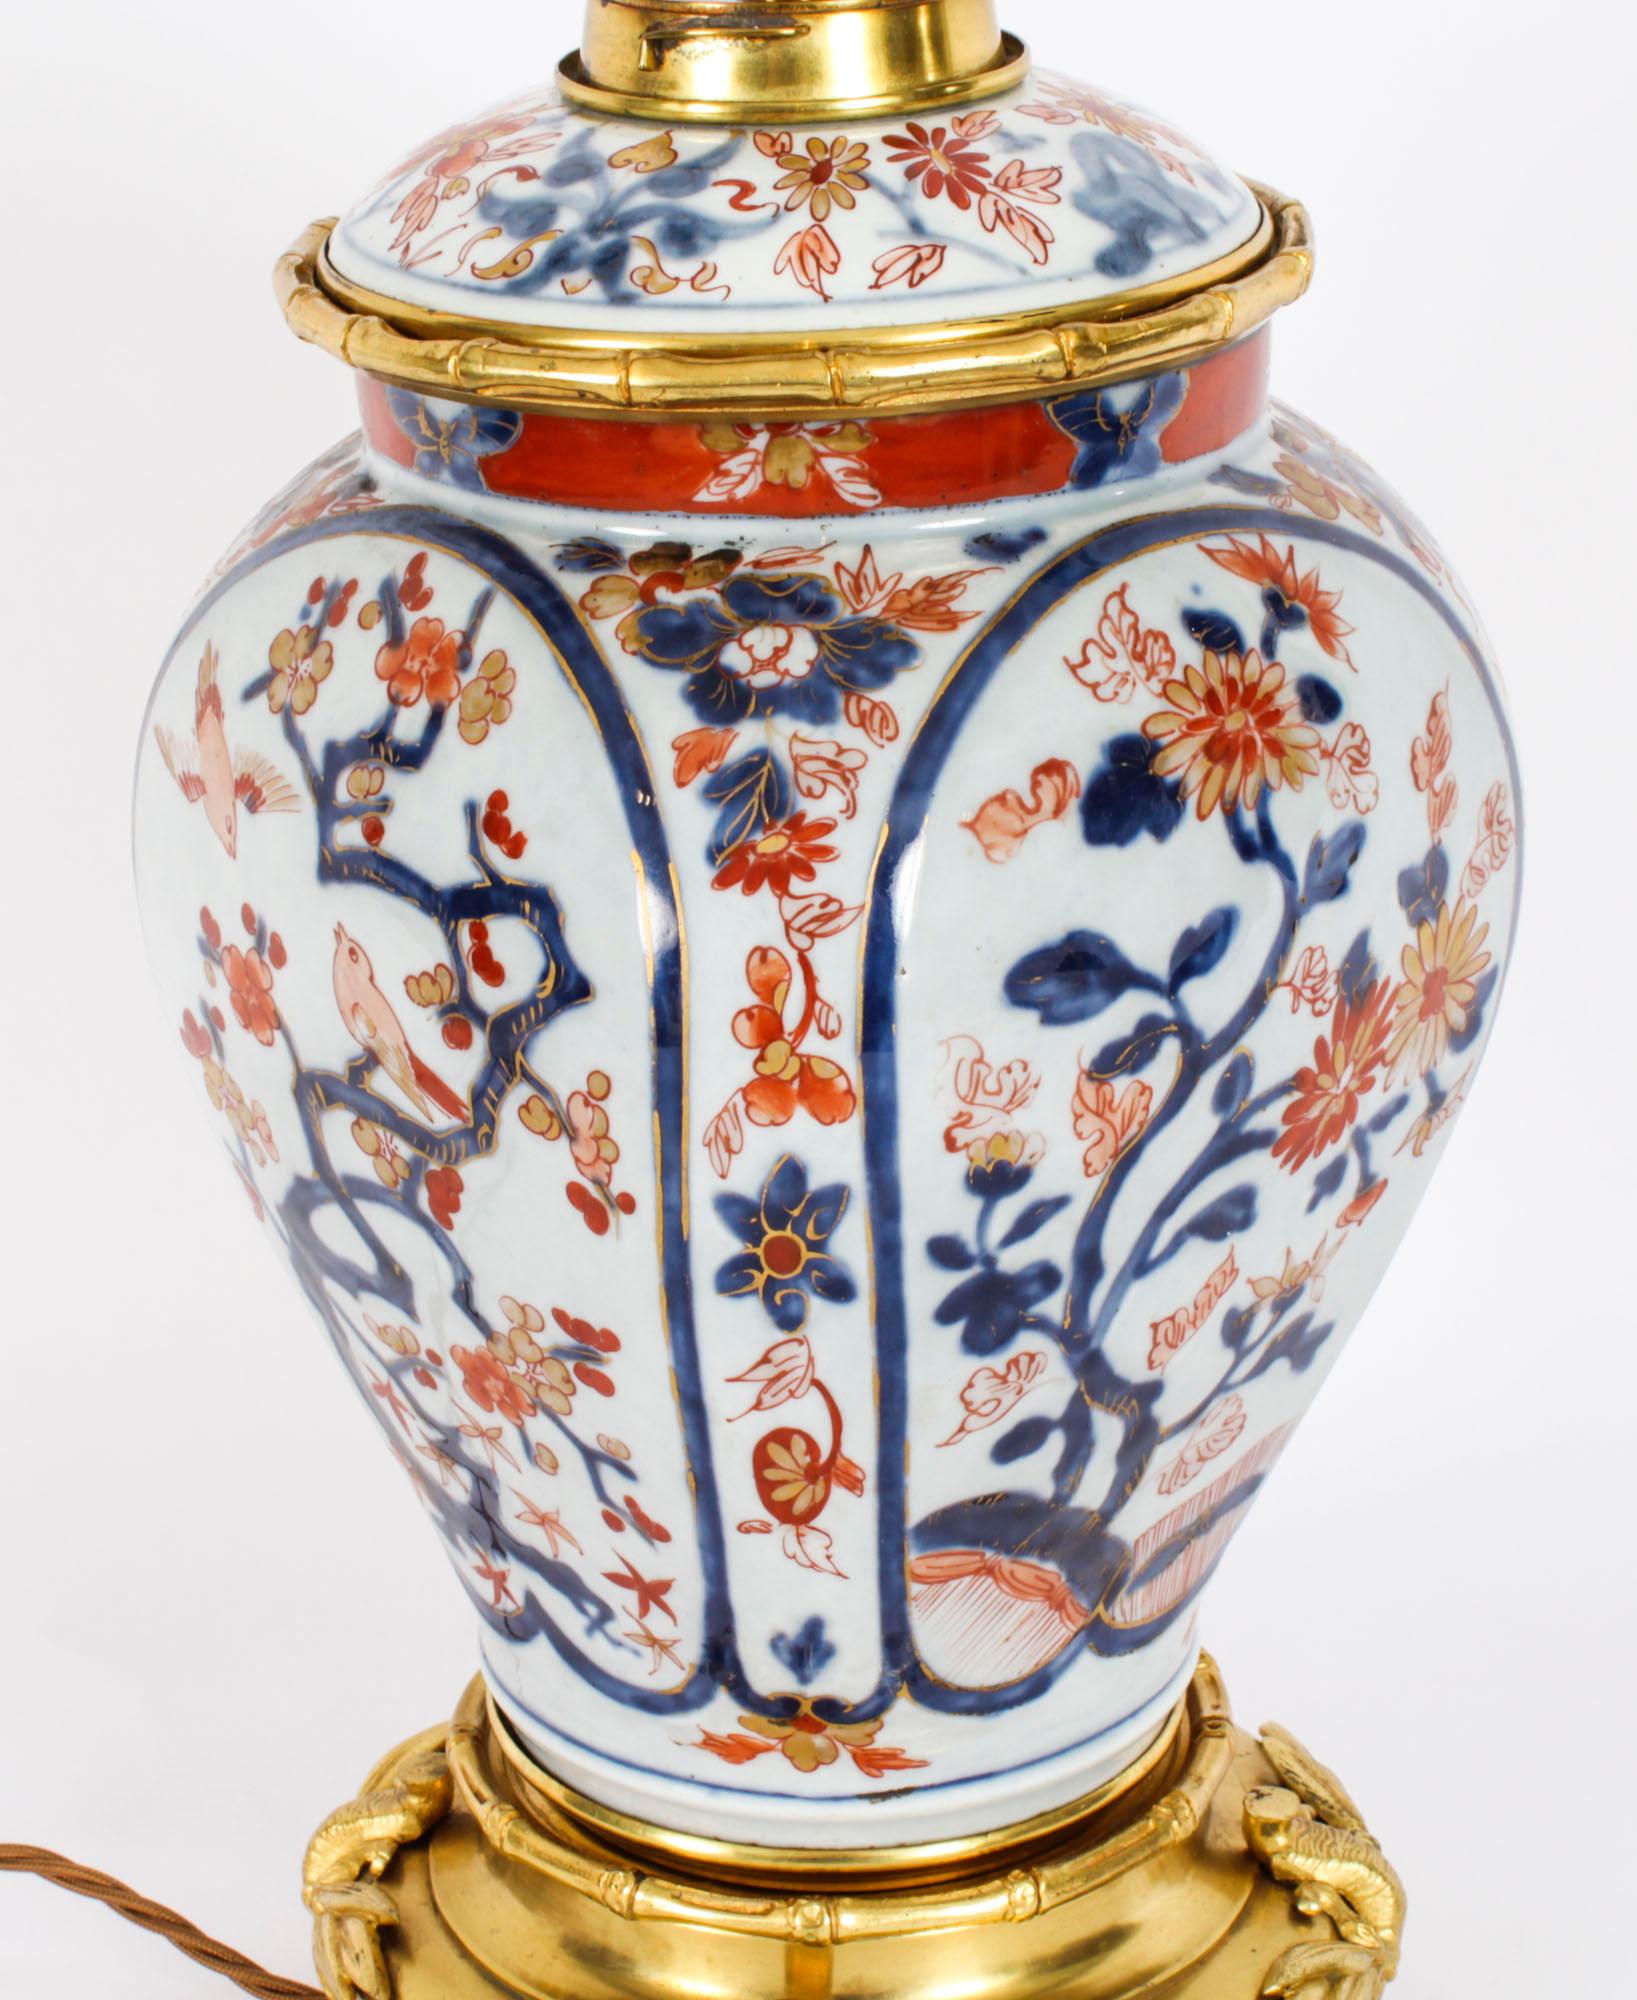 Antike japanische Imari Porcelain Tischlampe ca. 1840 19.Jahrhundert (Mittleres 19. Jahrhundert) im Angebot